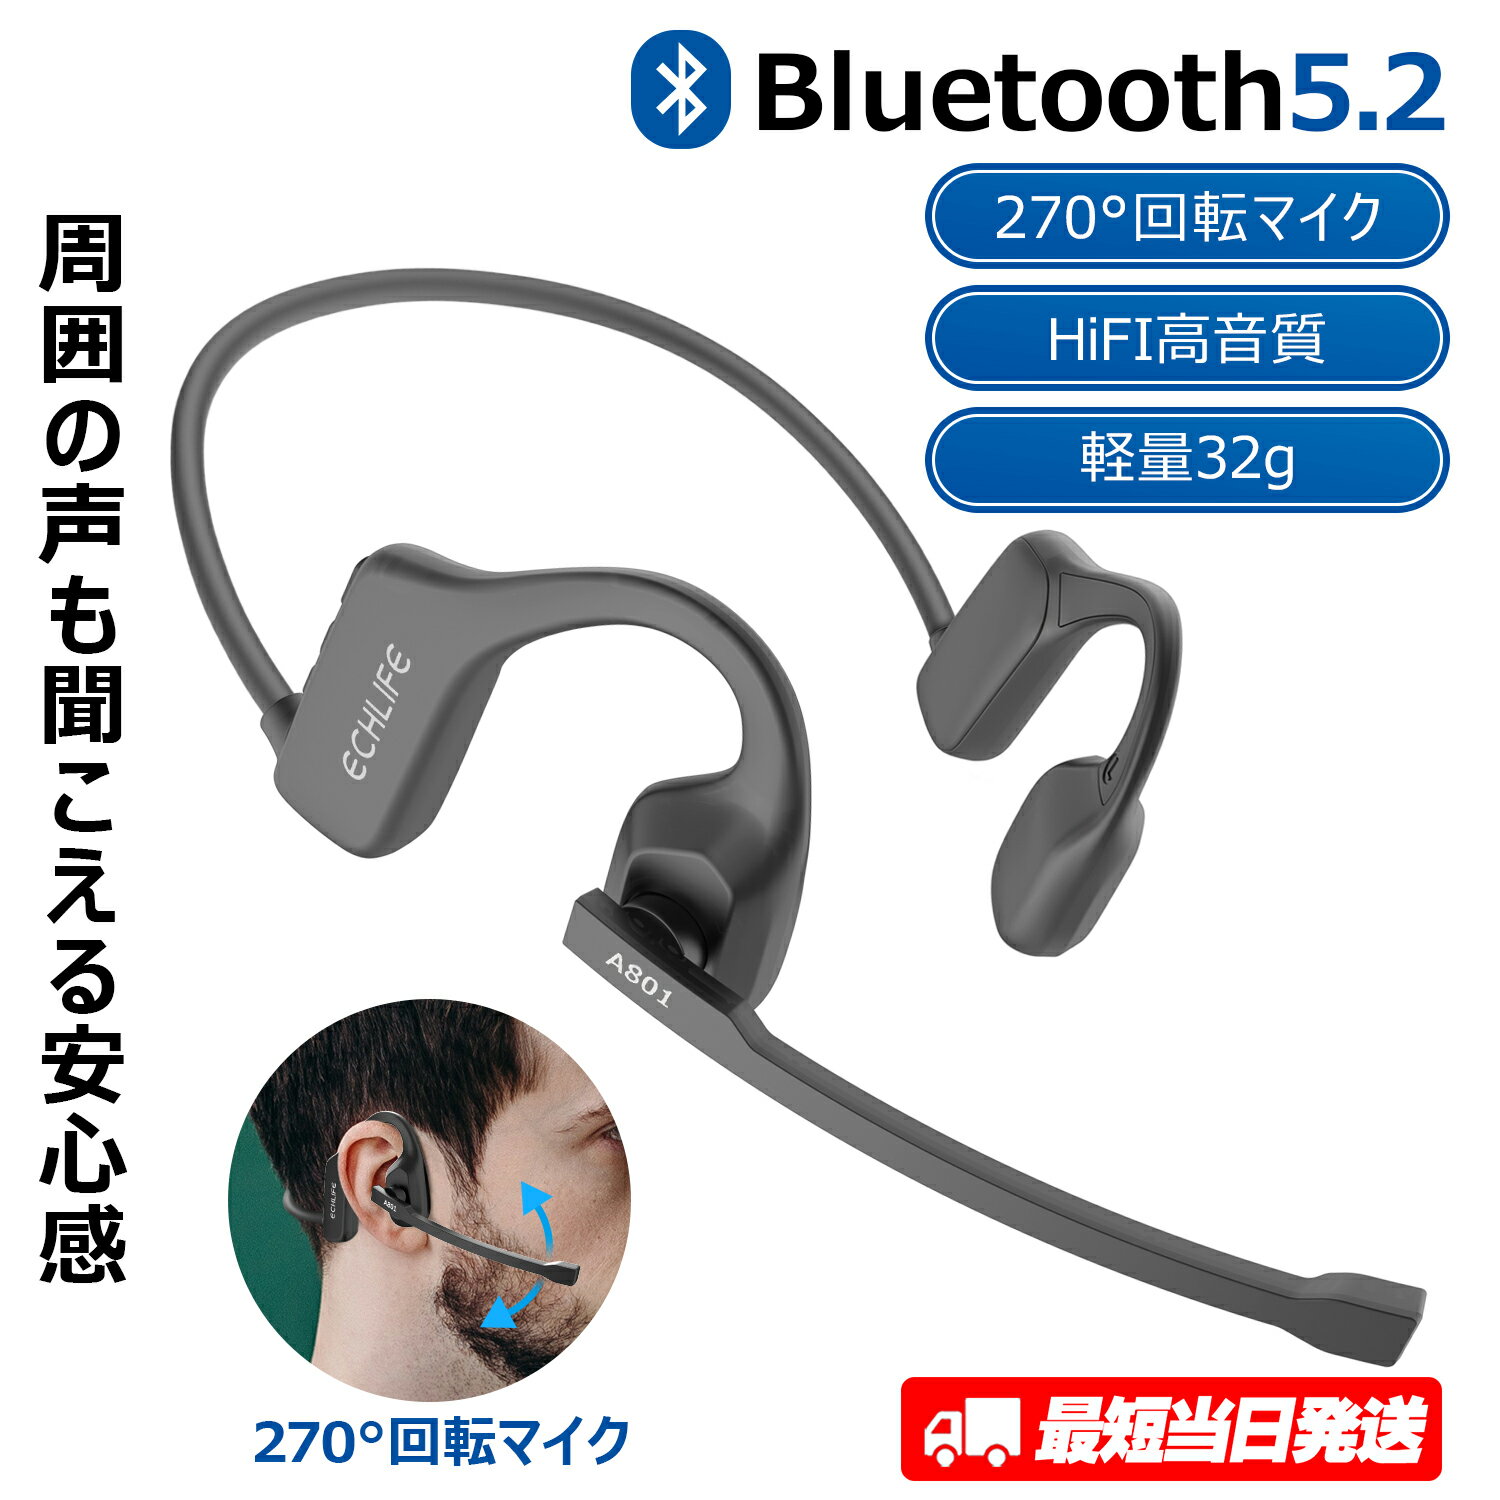 Bluetooth ワイヤレス ヘッドセット マイク付き 空気伝導イヤホン 軽量32g 両耳 ノイズキャンセリング 防水 骨伝導イ…